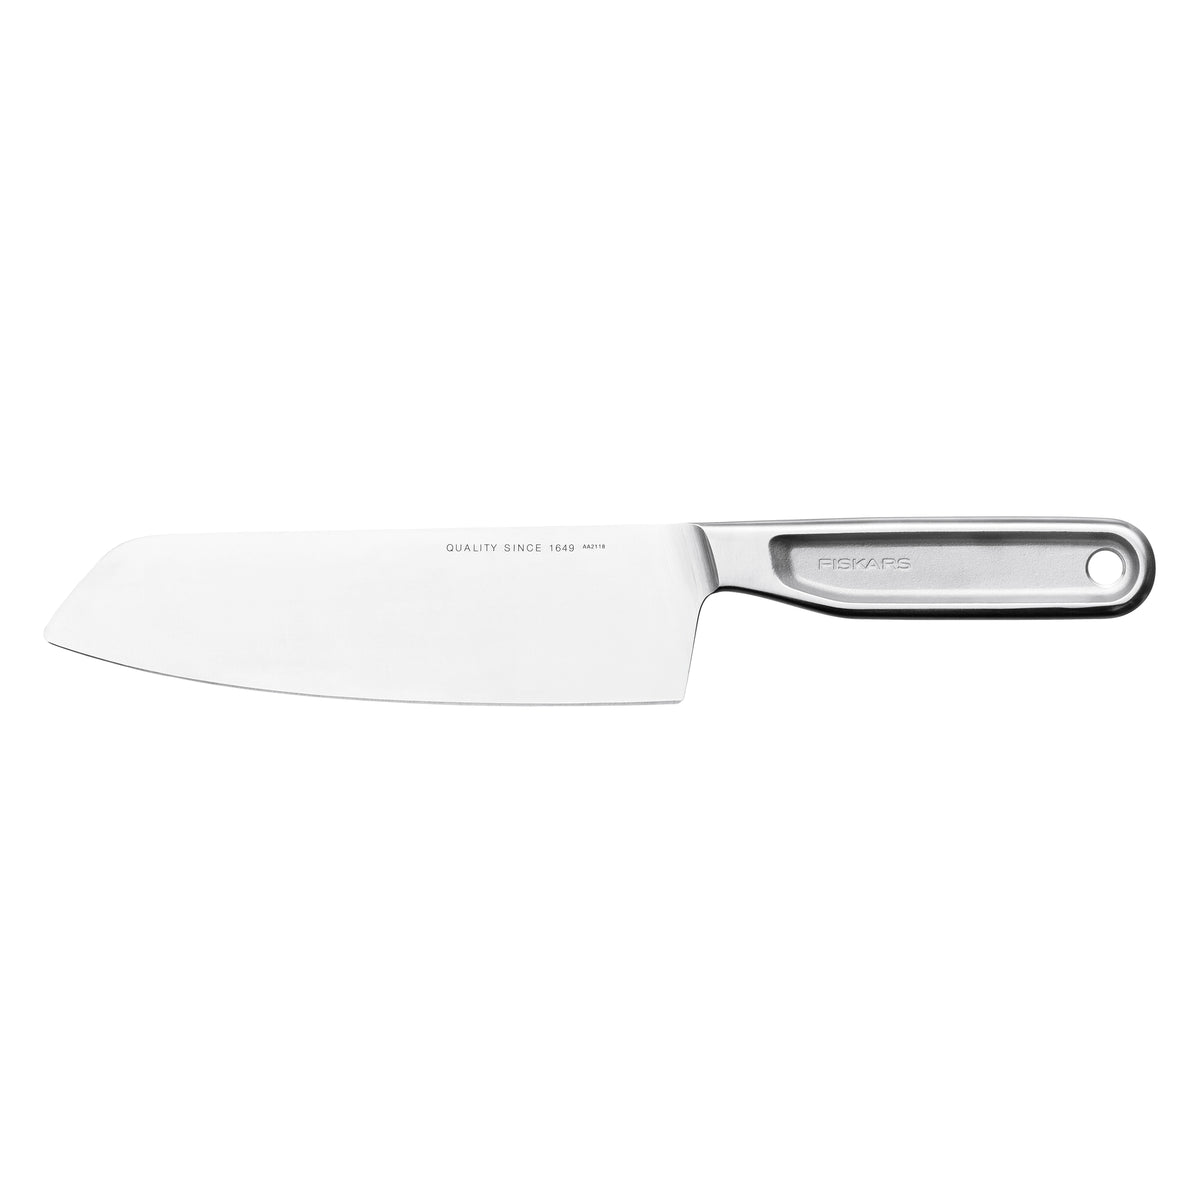 All Steel Santoku knife 17 cm - fiskars - Bluecashew Kitchen Homestead